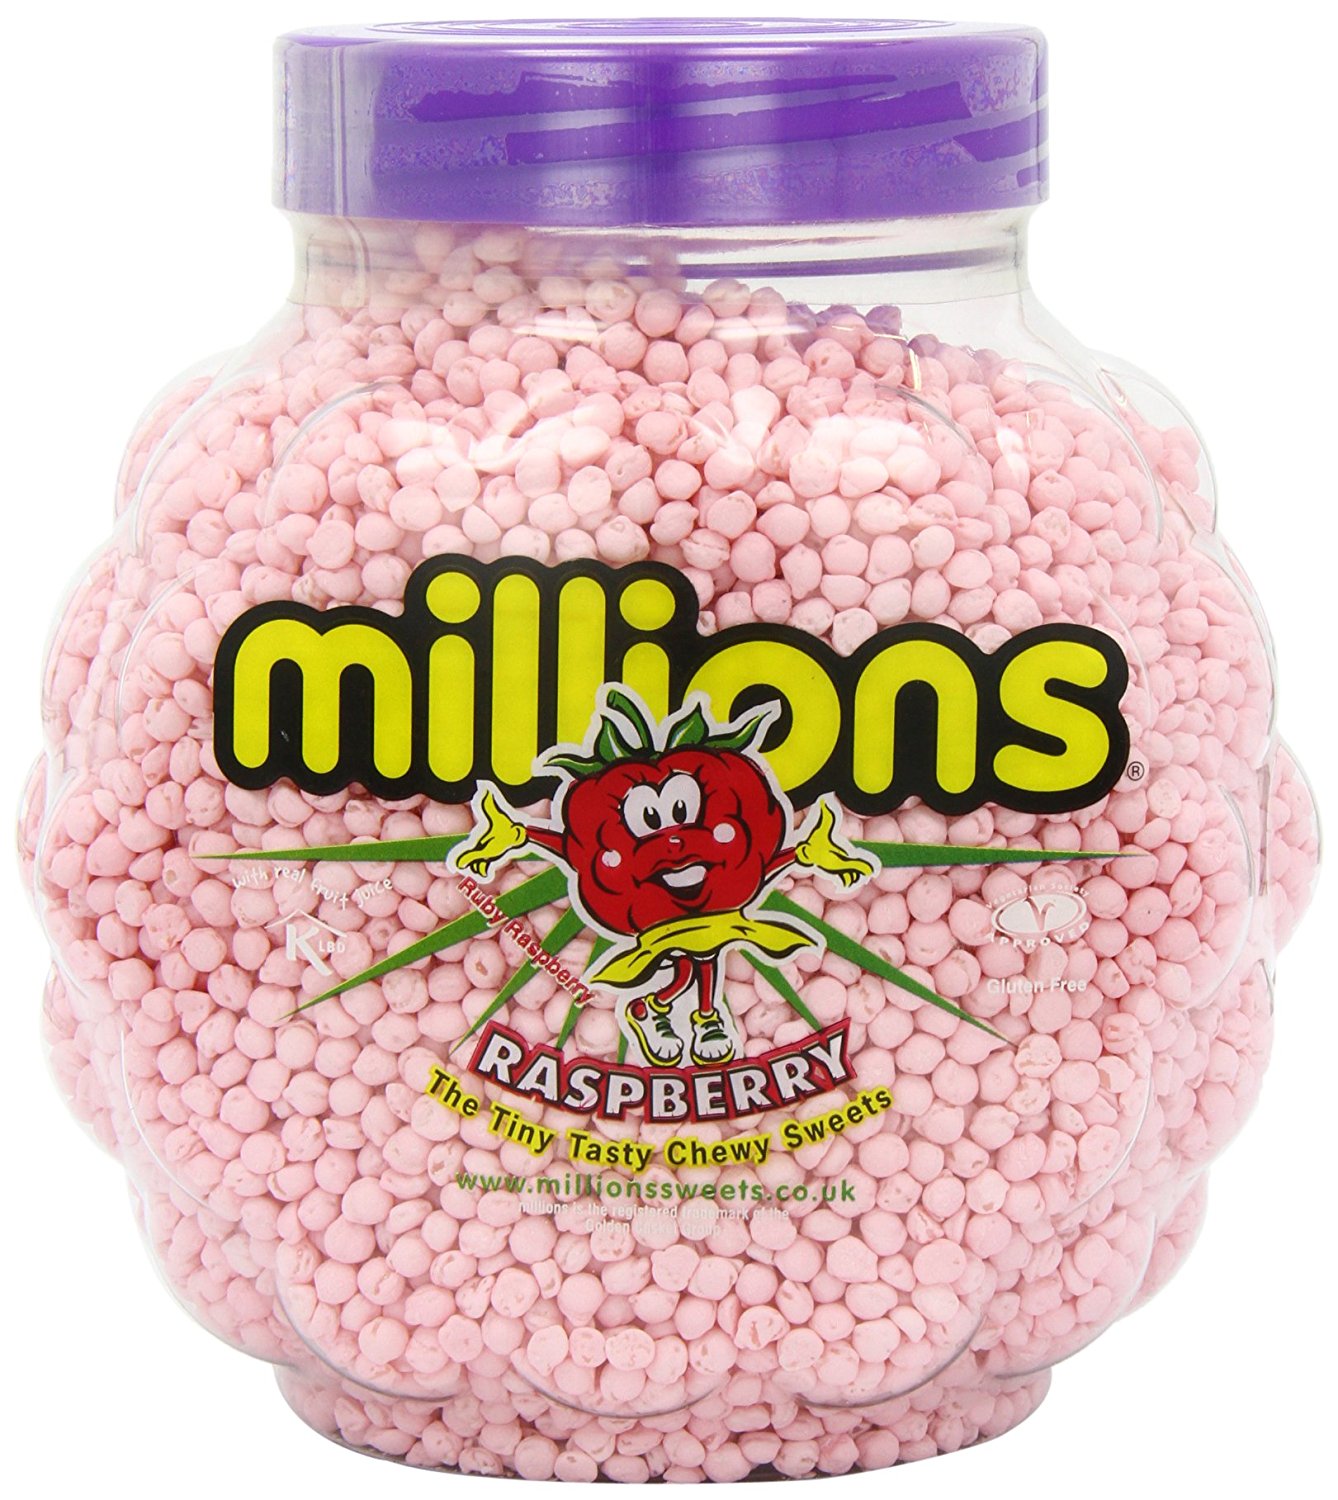 Millions Jar Raspberry 2.27 Kg: Amazon.co.uk: Grocery